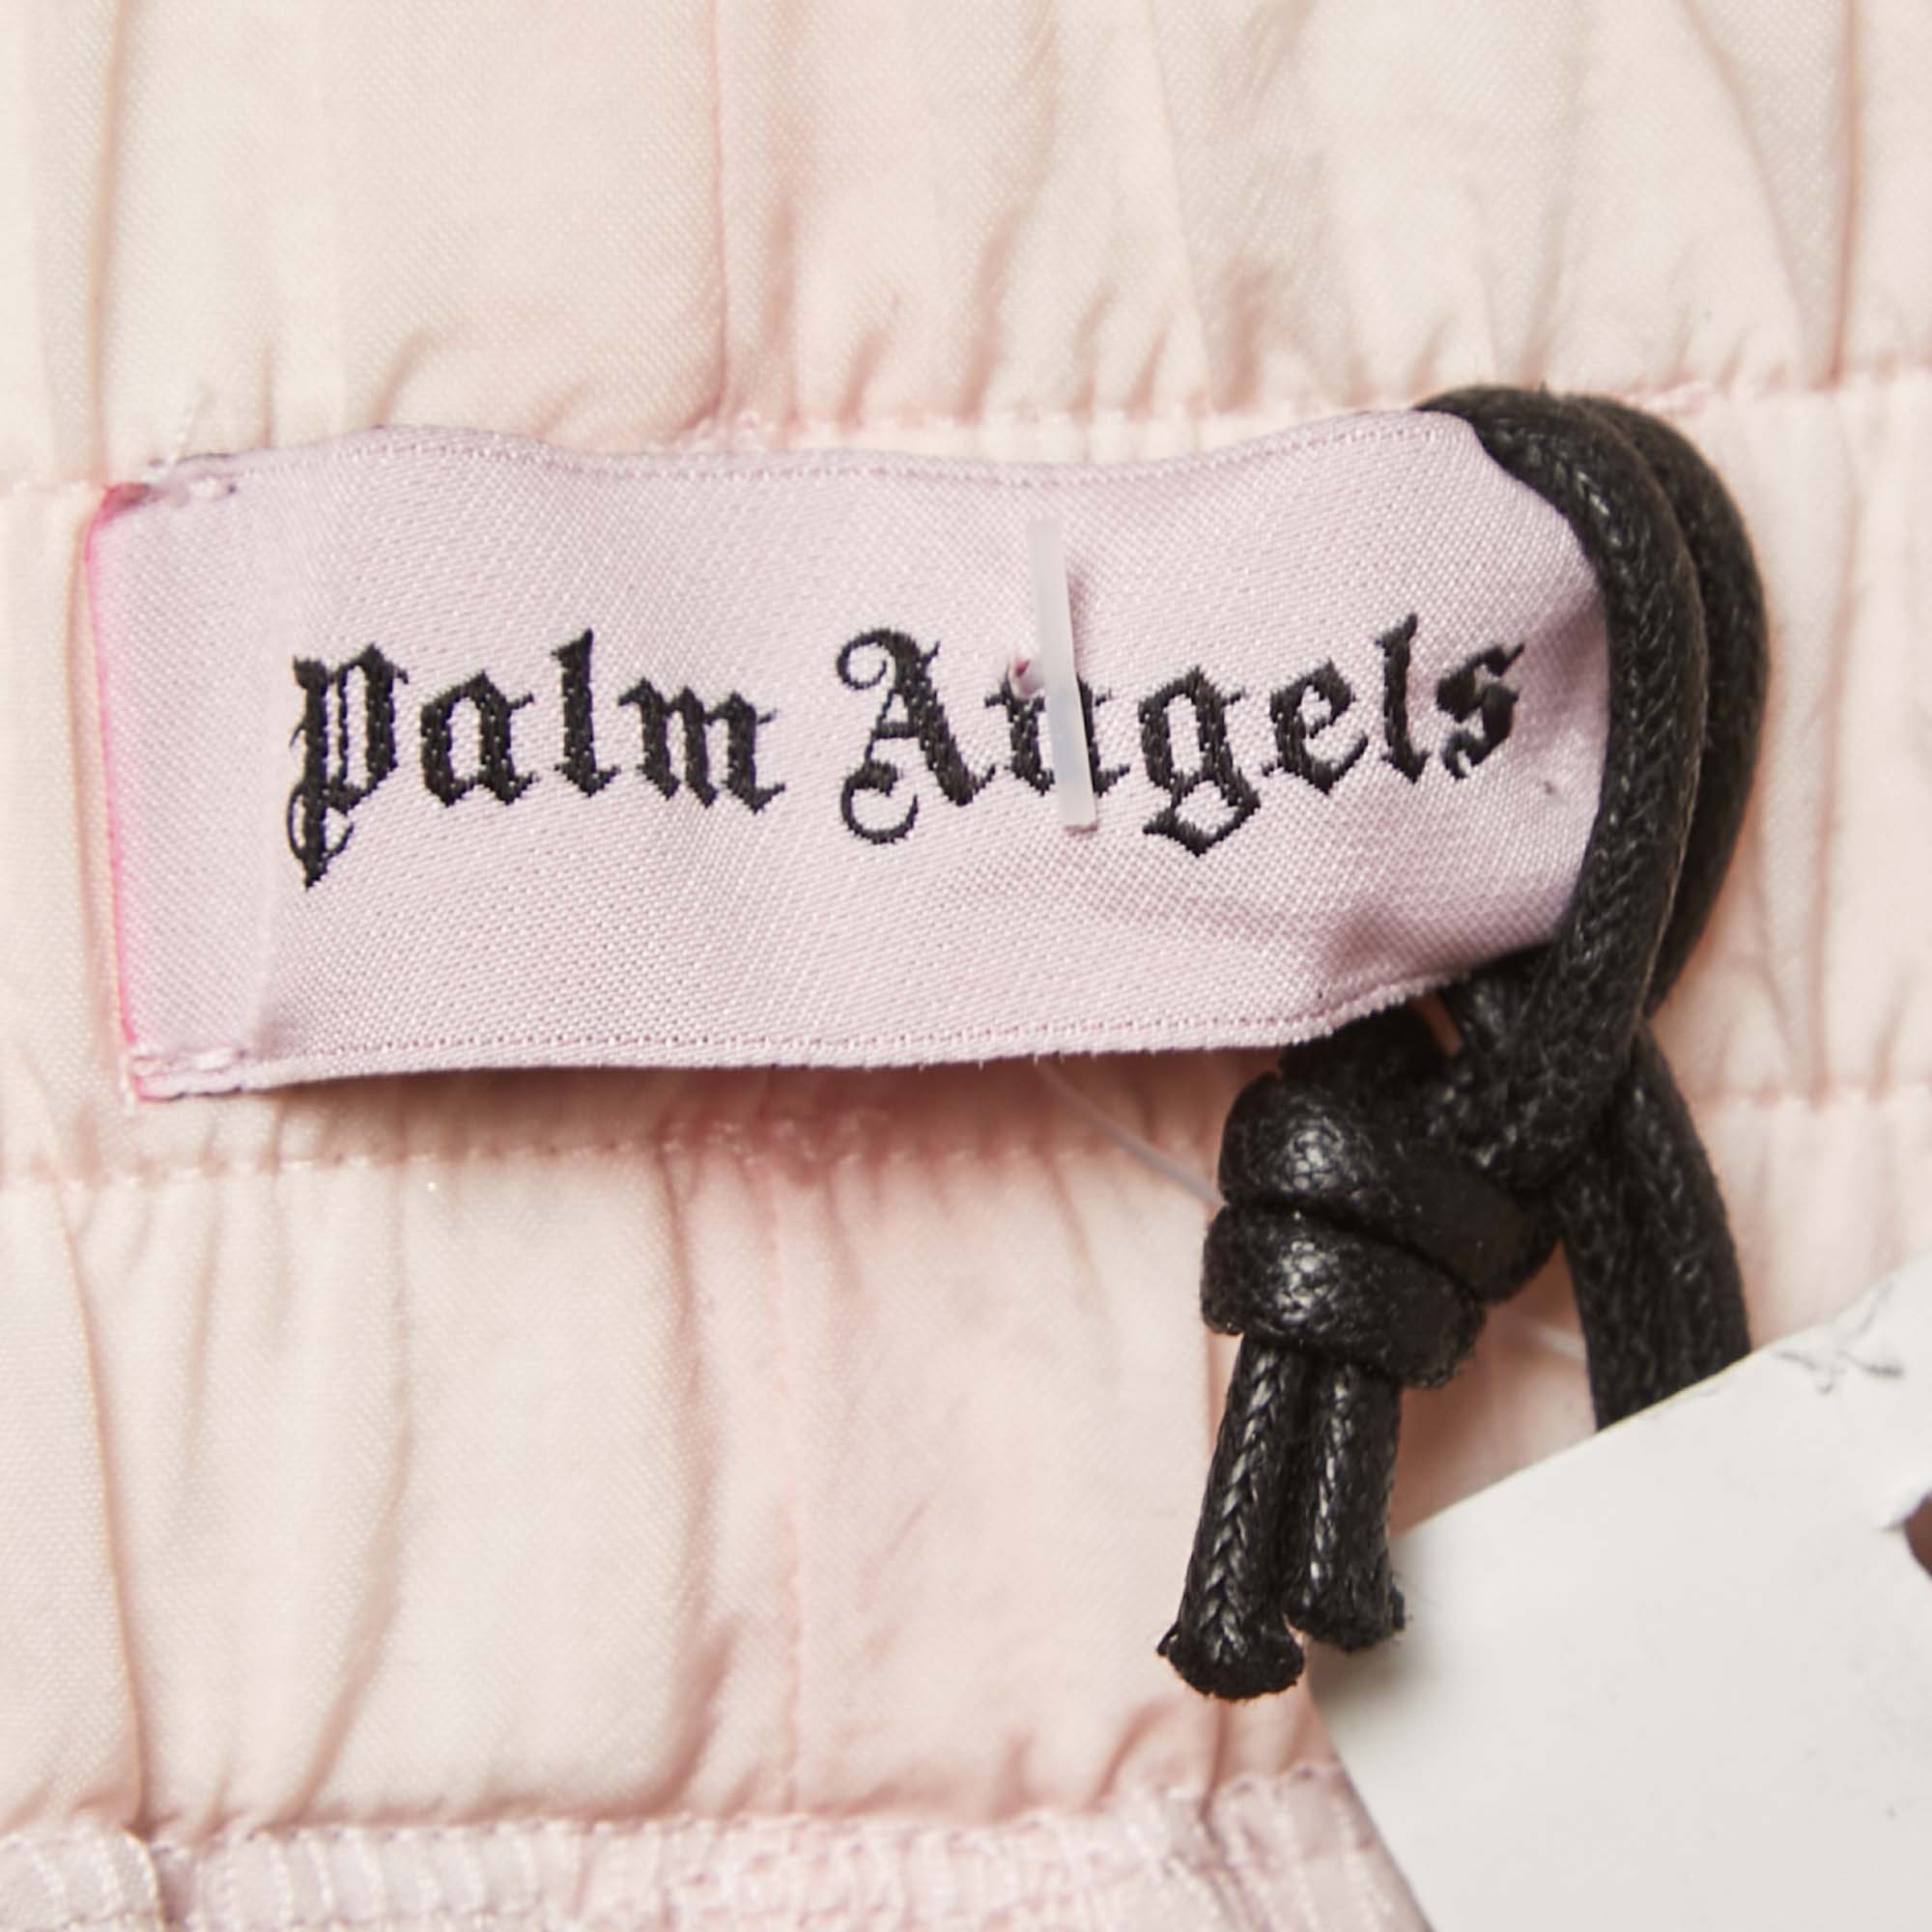 Palm Angels Black/Pink Colorblock Nylon Track Pants S